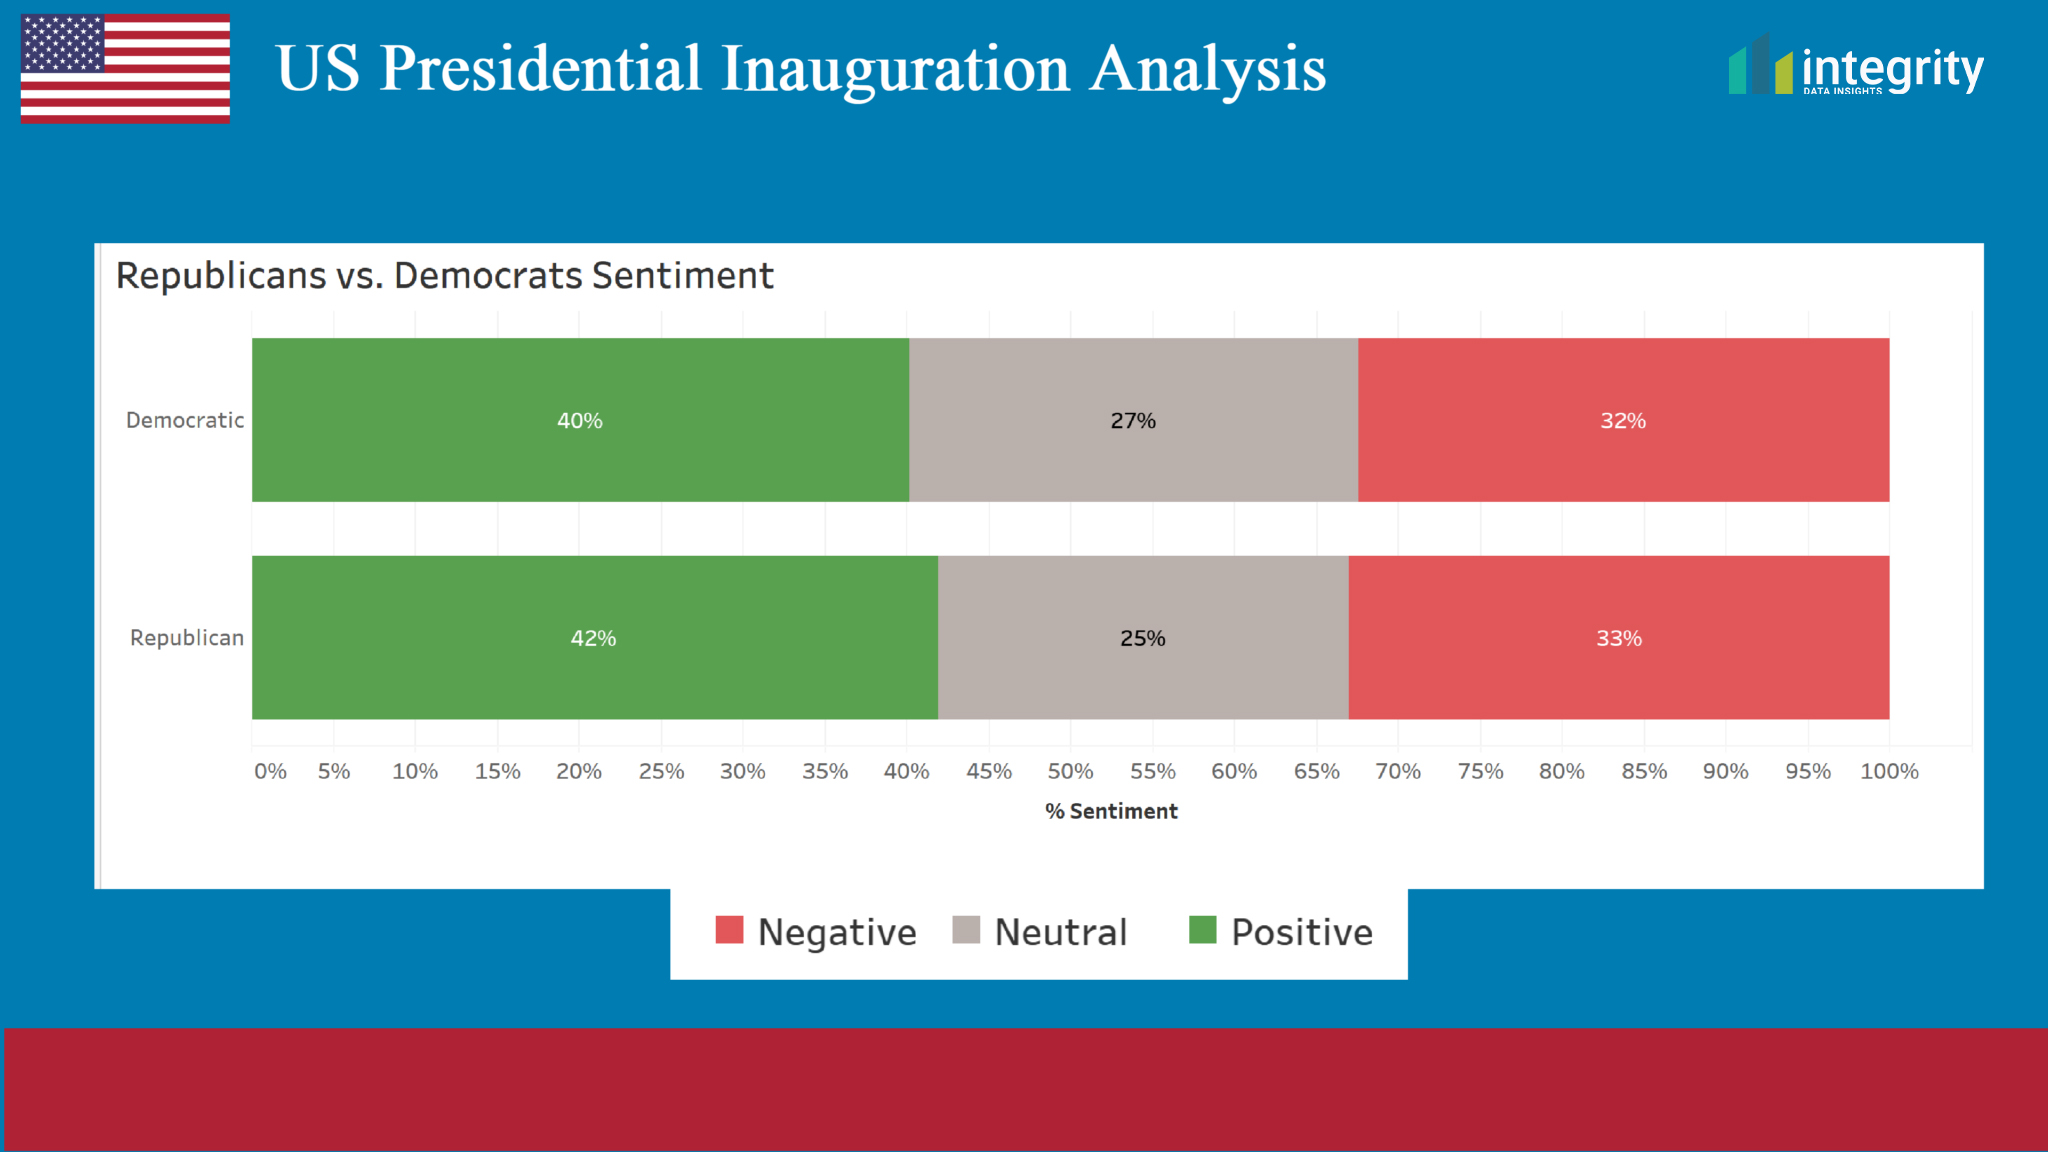 Sentiment Analysis Comparison of Republicans and Democrats